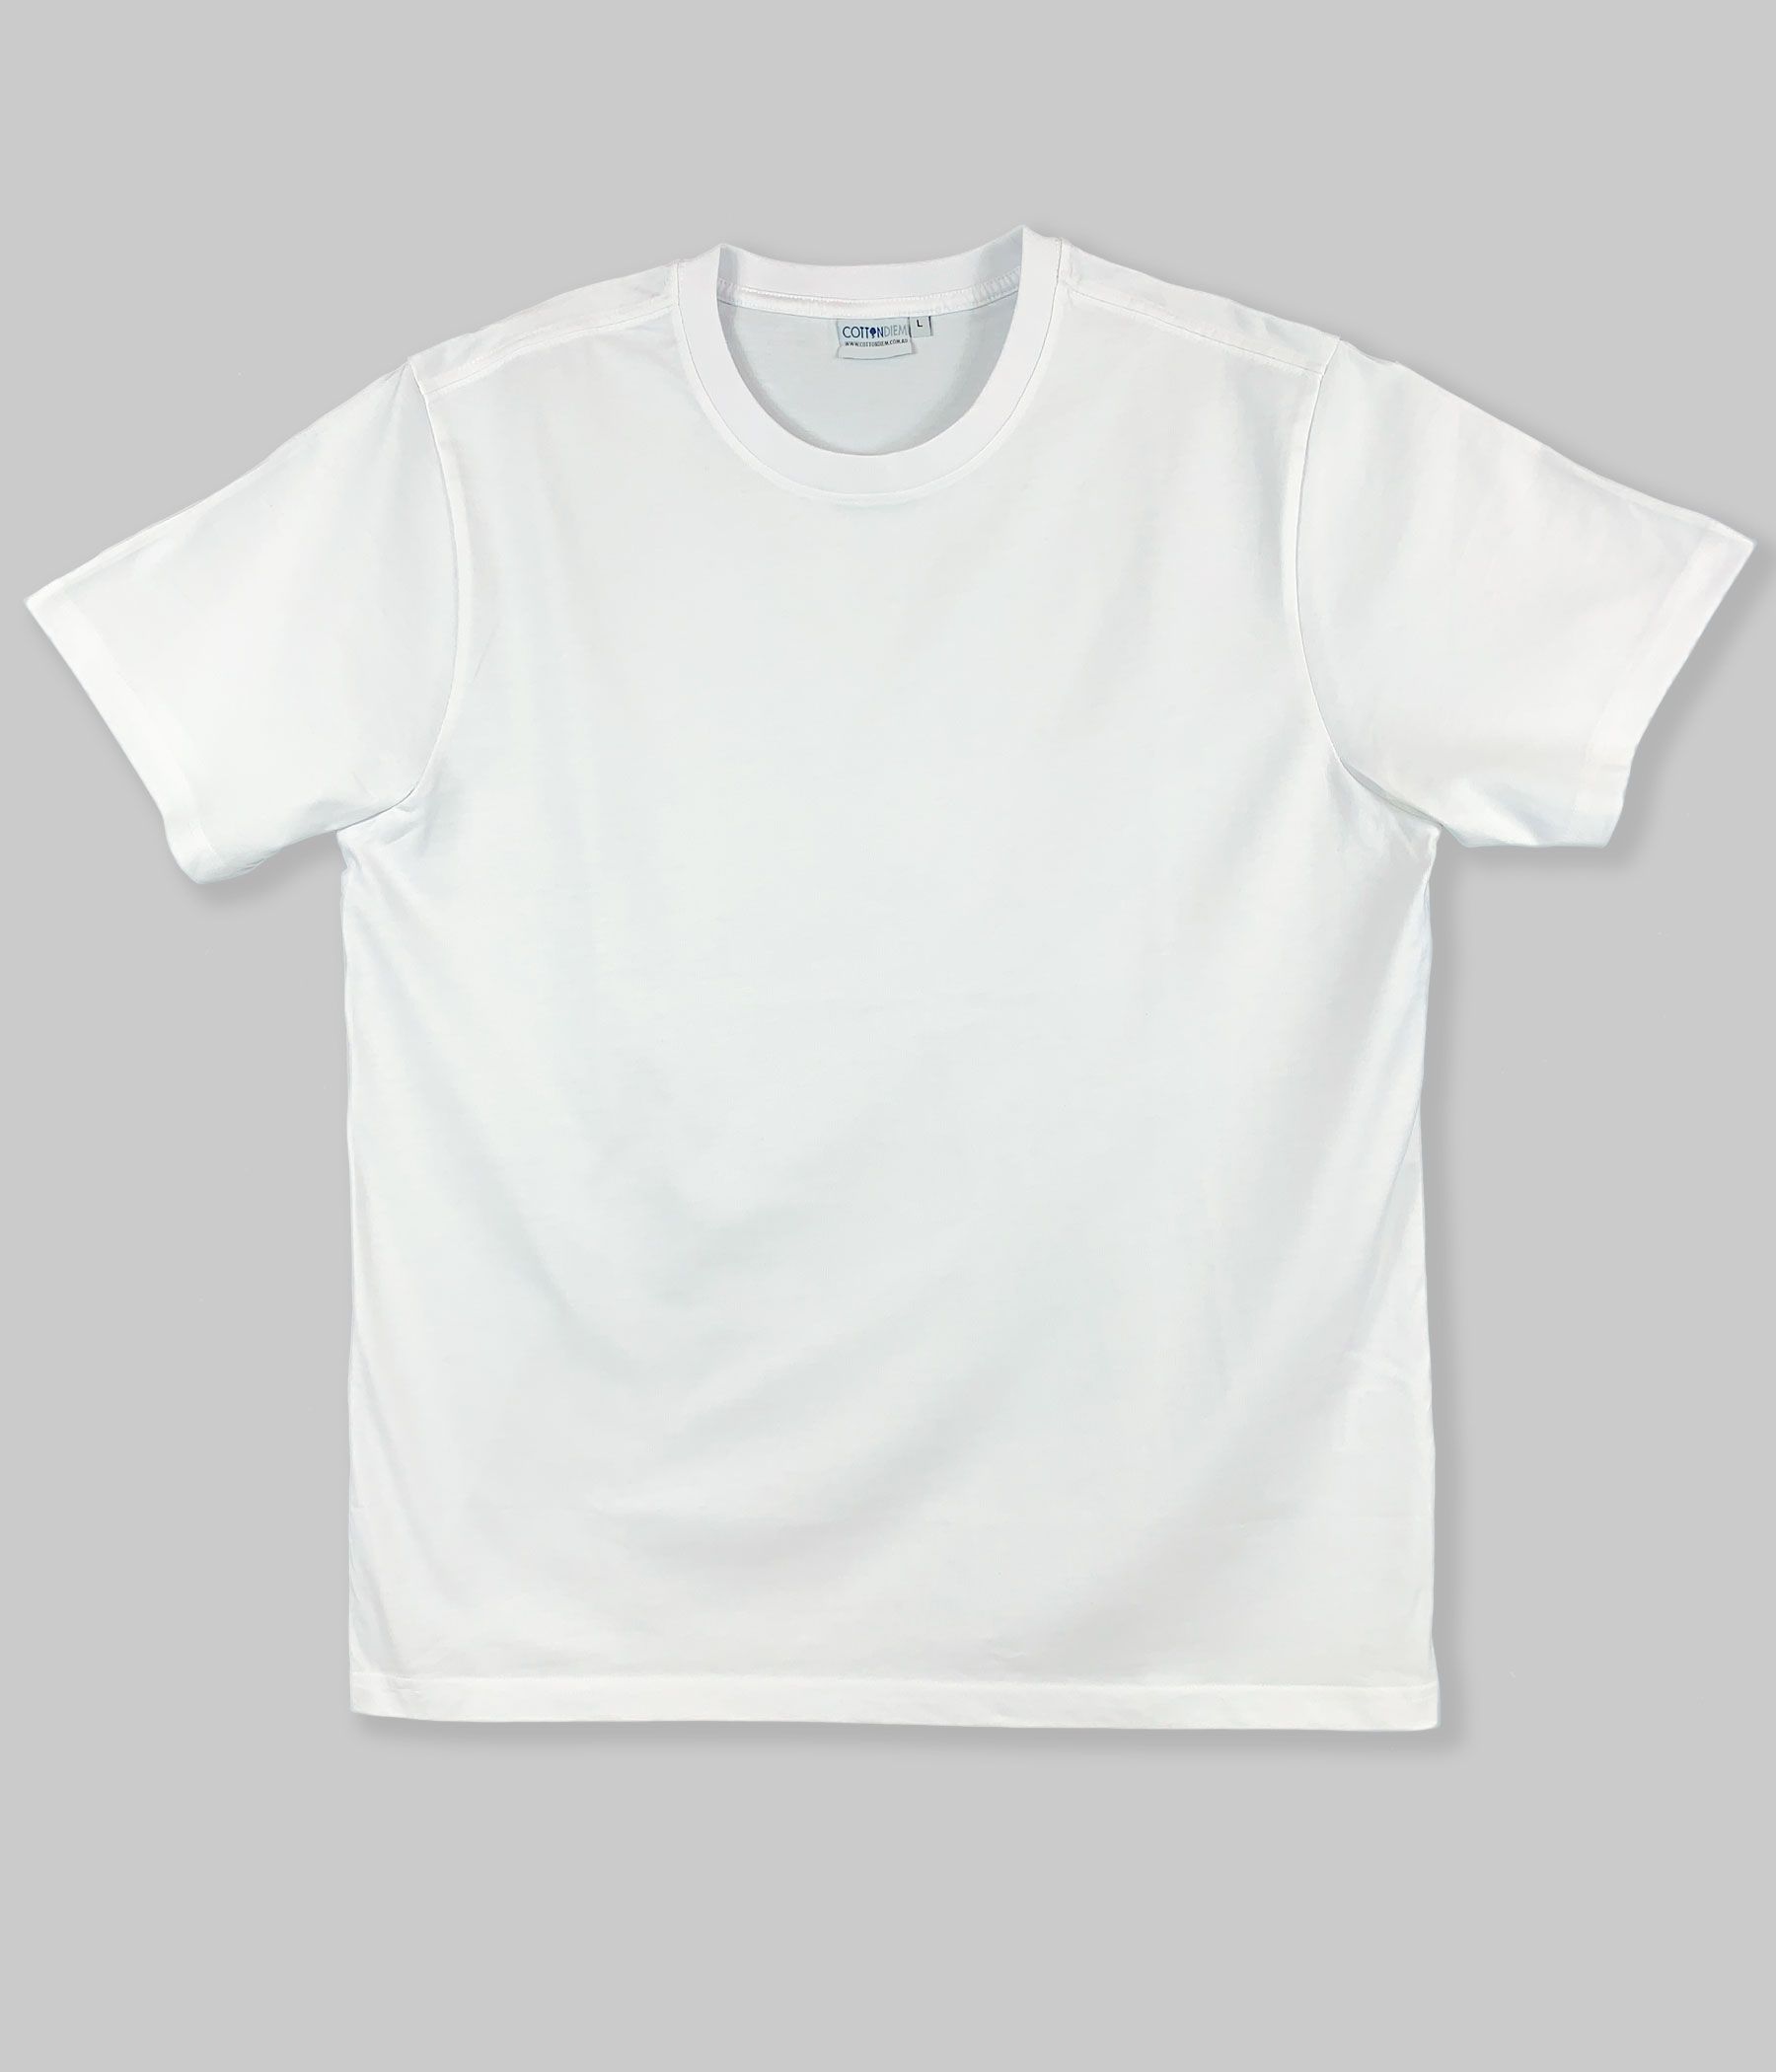 Blank plain white t-shirts - 200 GSM